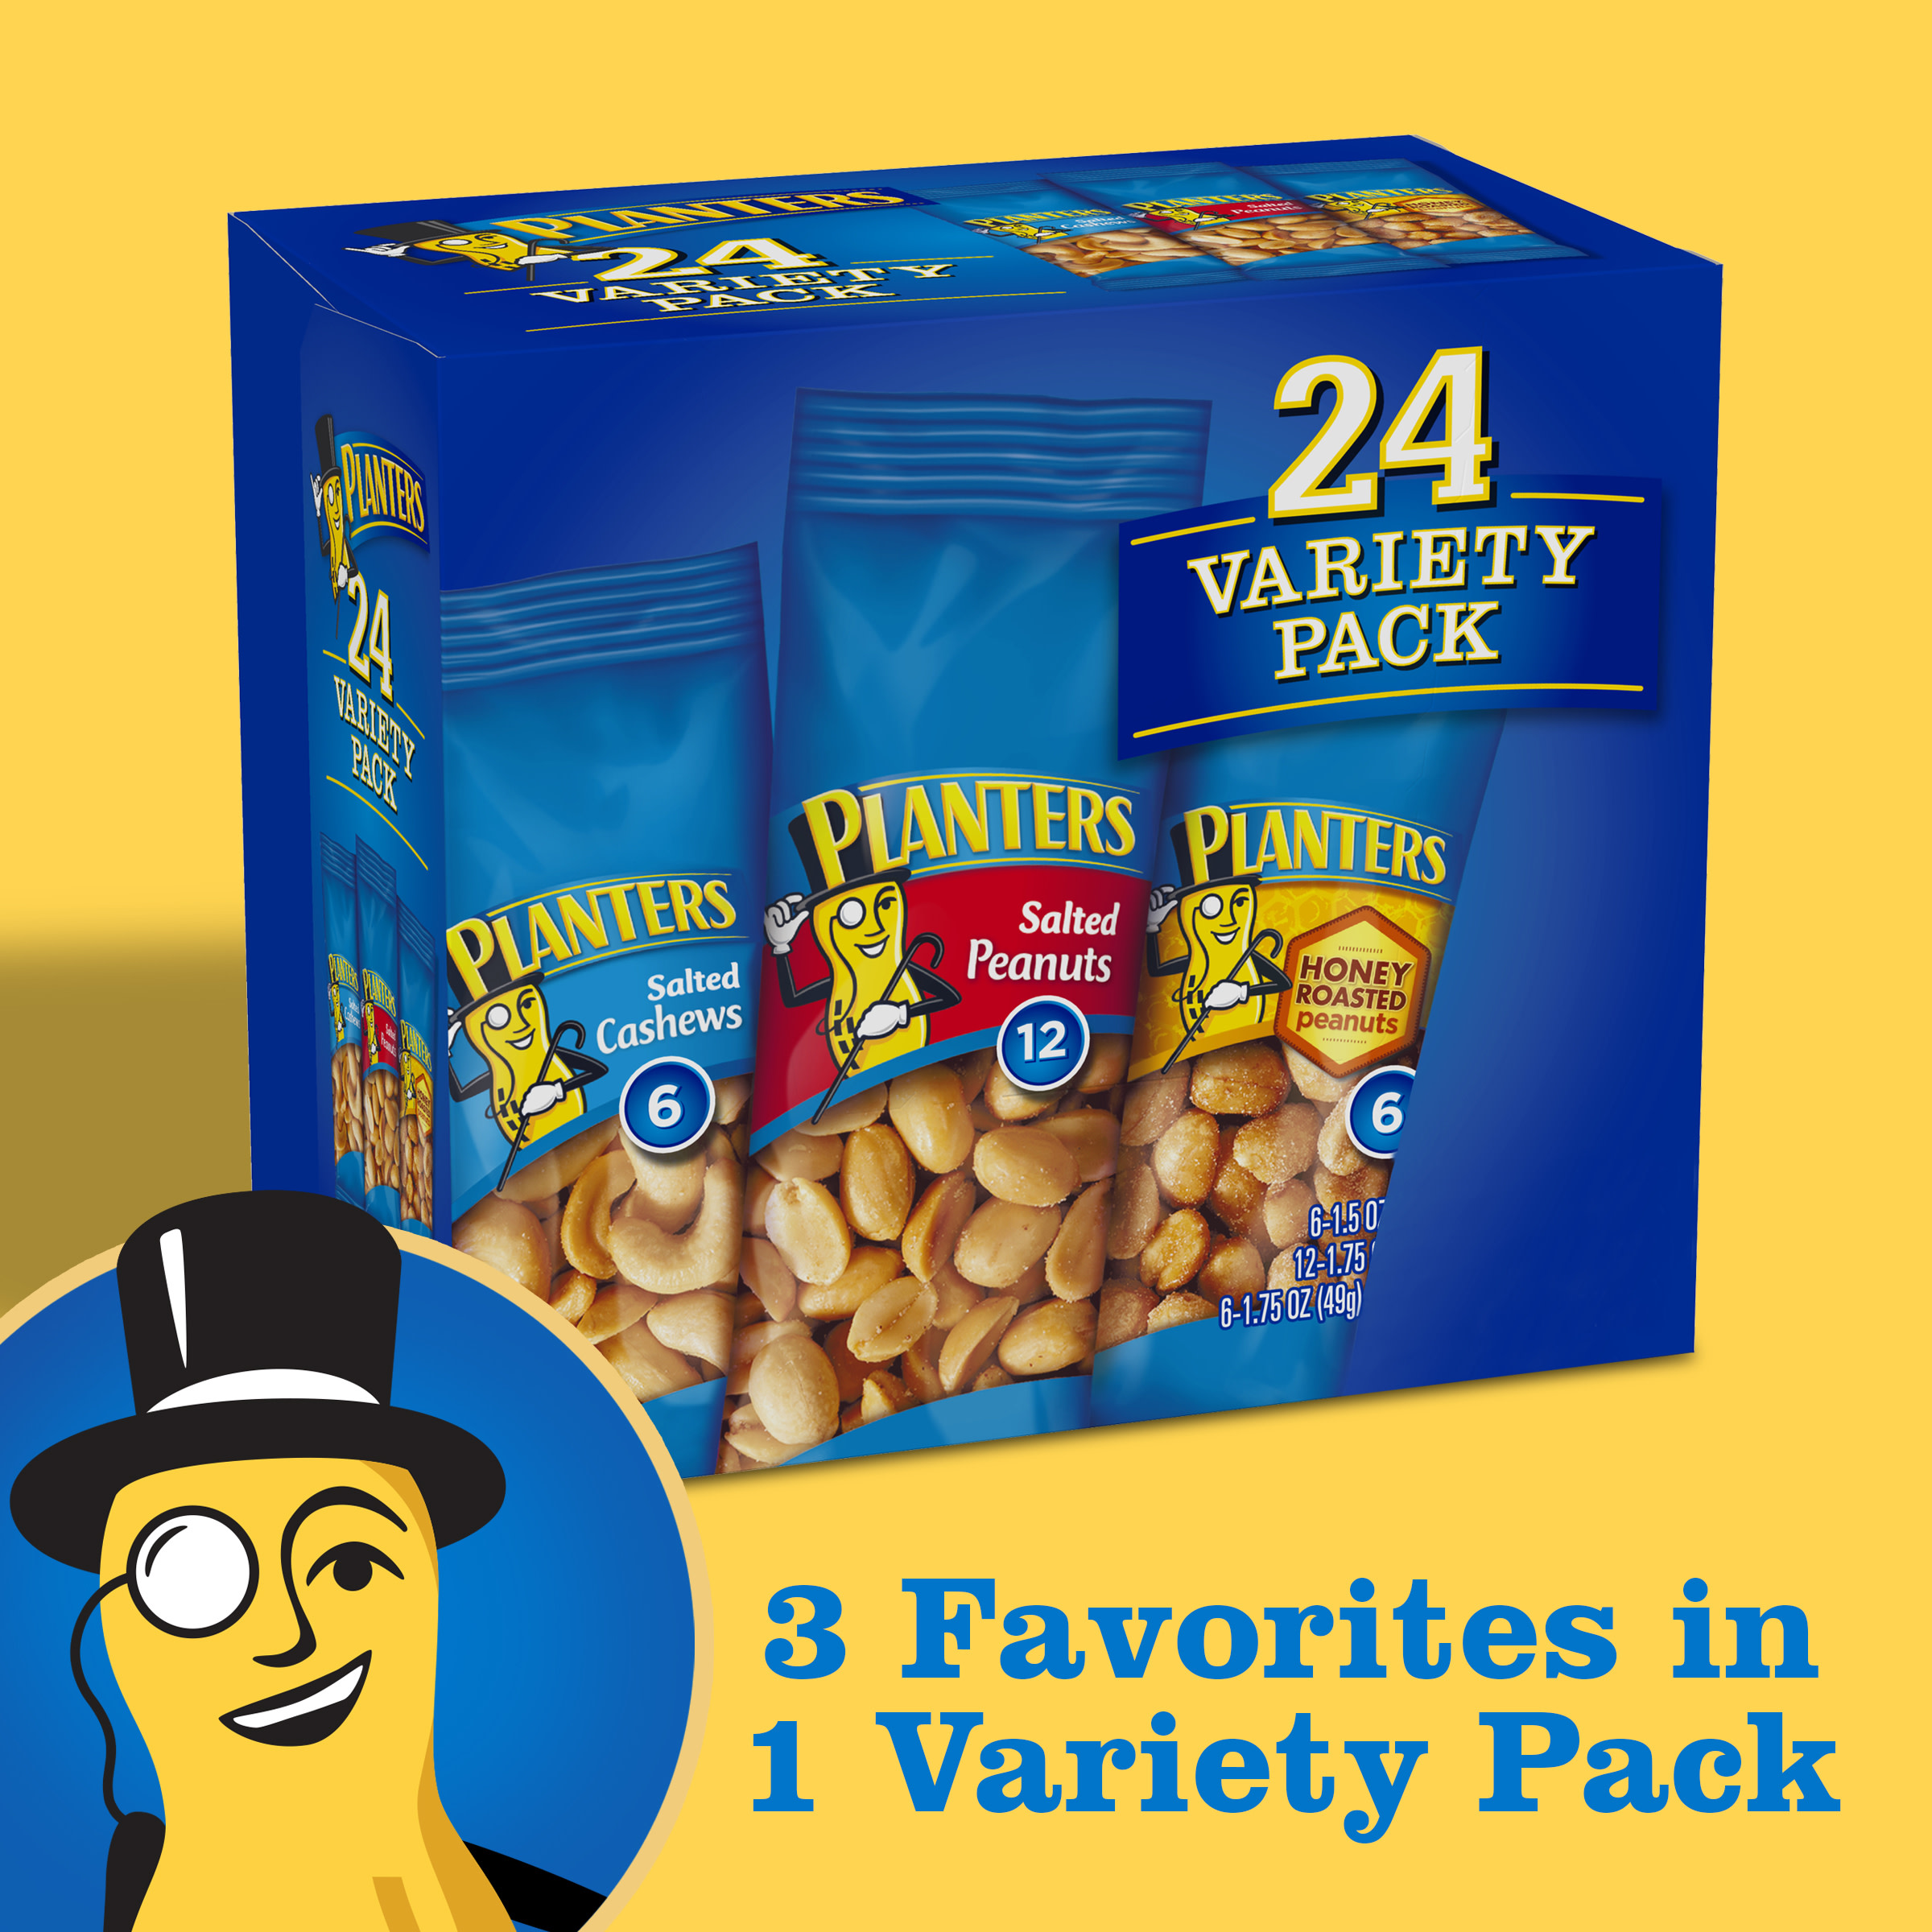 Planters Salted Cashews, Salted Peanuts & Honey Roasted Peanuts Variety Pack, 24 ct Packs - image 2 of 15